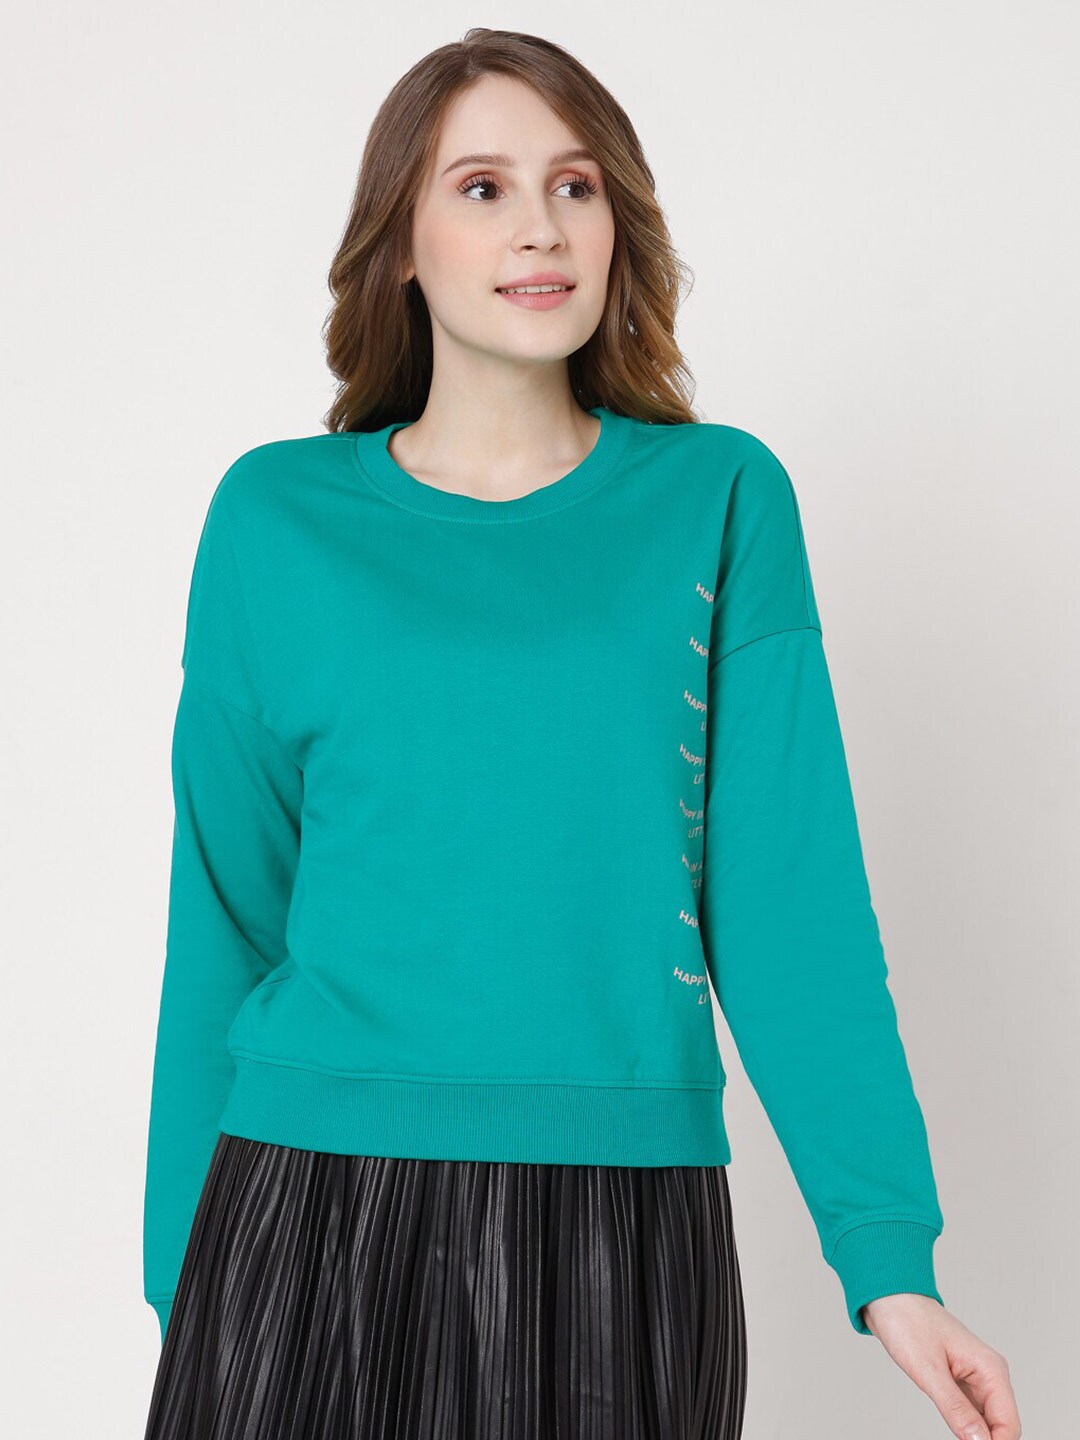 Vero Moda Women Green Cotton Sweatshirt Price in India